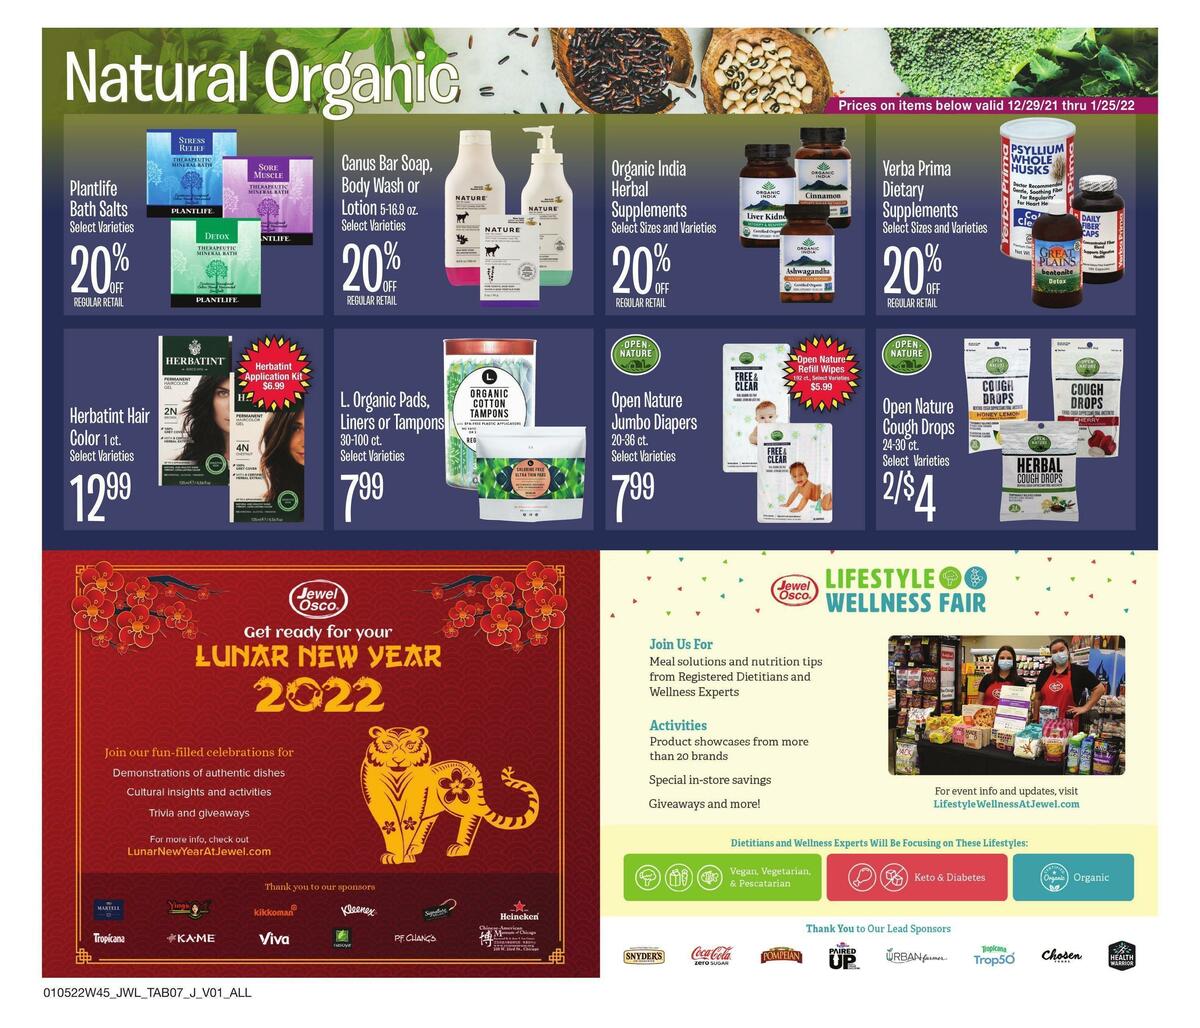 Jewel Osco Natural & Organic Weekly Ad from January 5